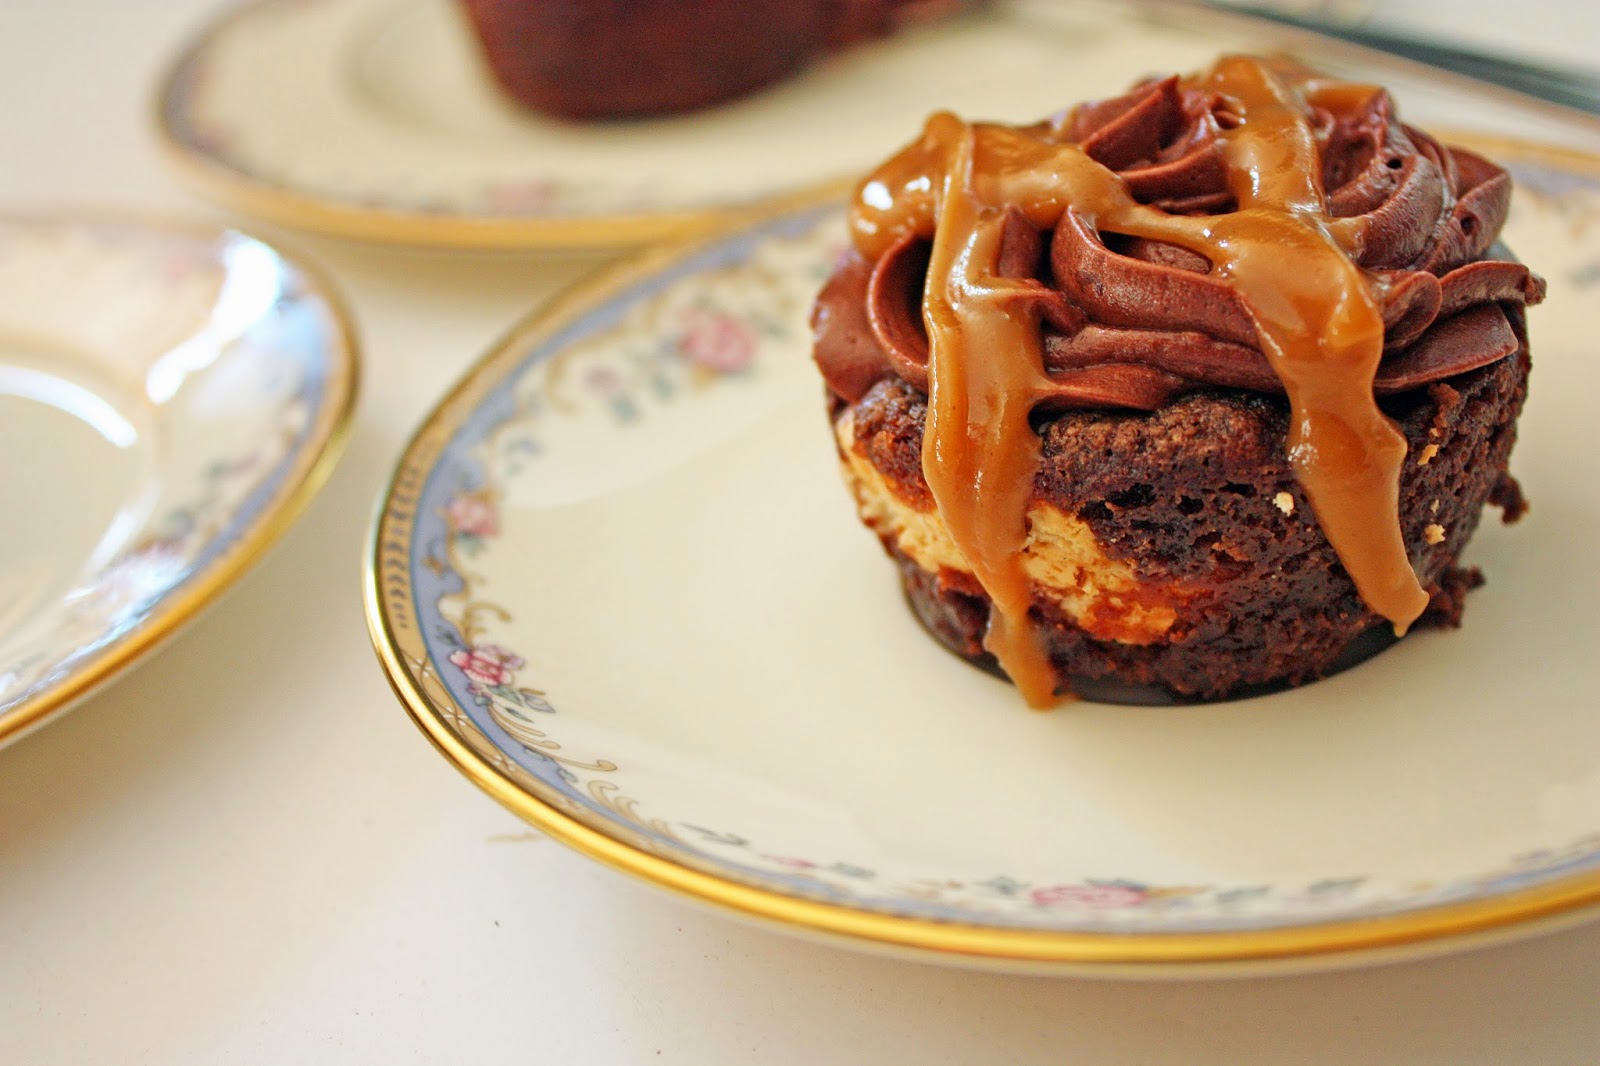 Cheesecake-stuffed mocha zucchini cupcakes with mocha frosting and peanut butter glaze